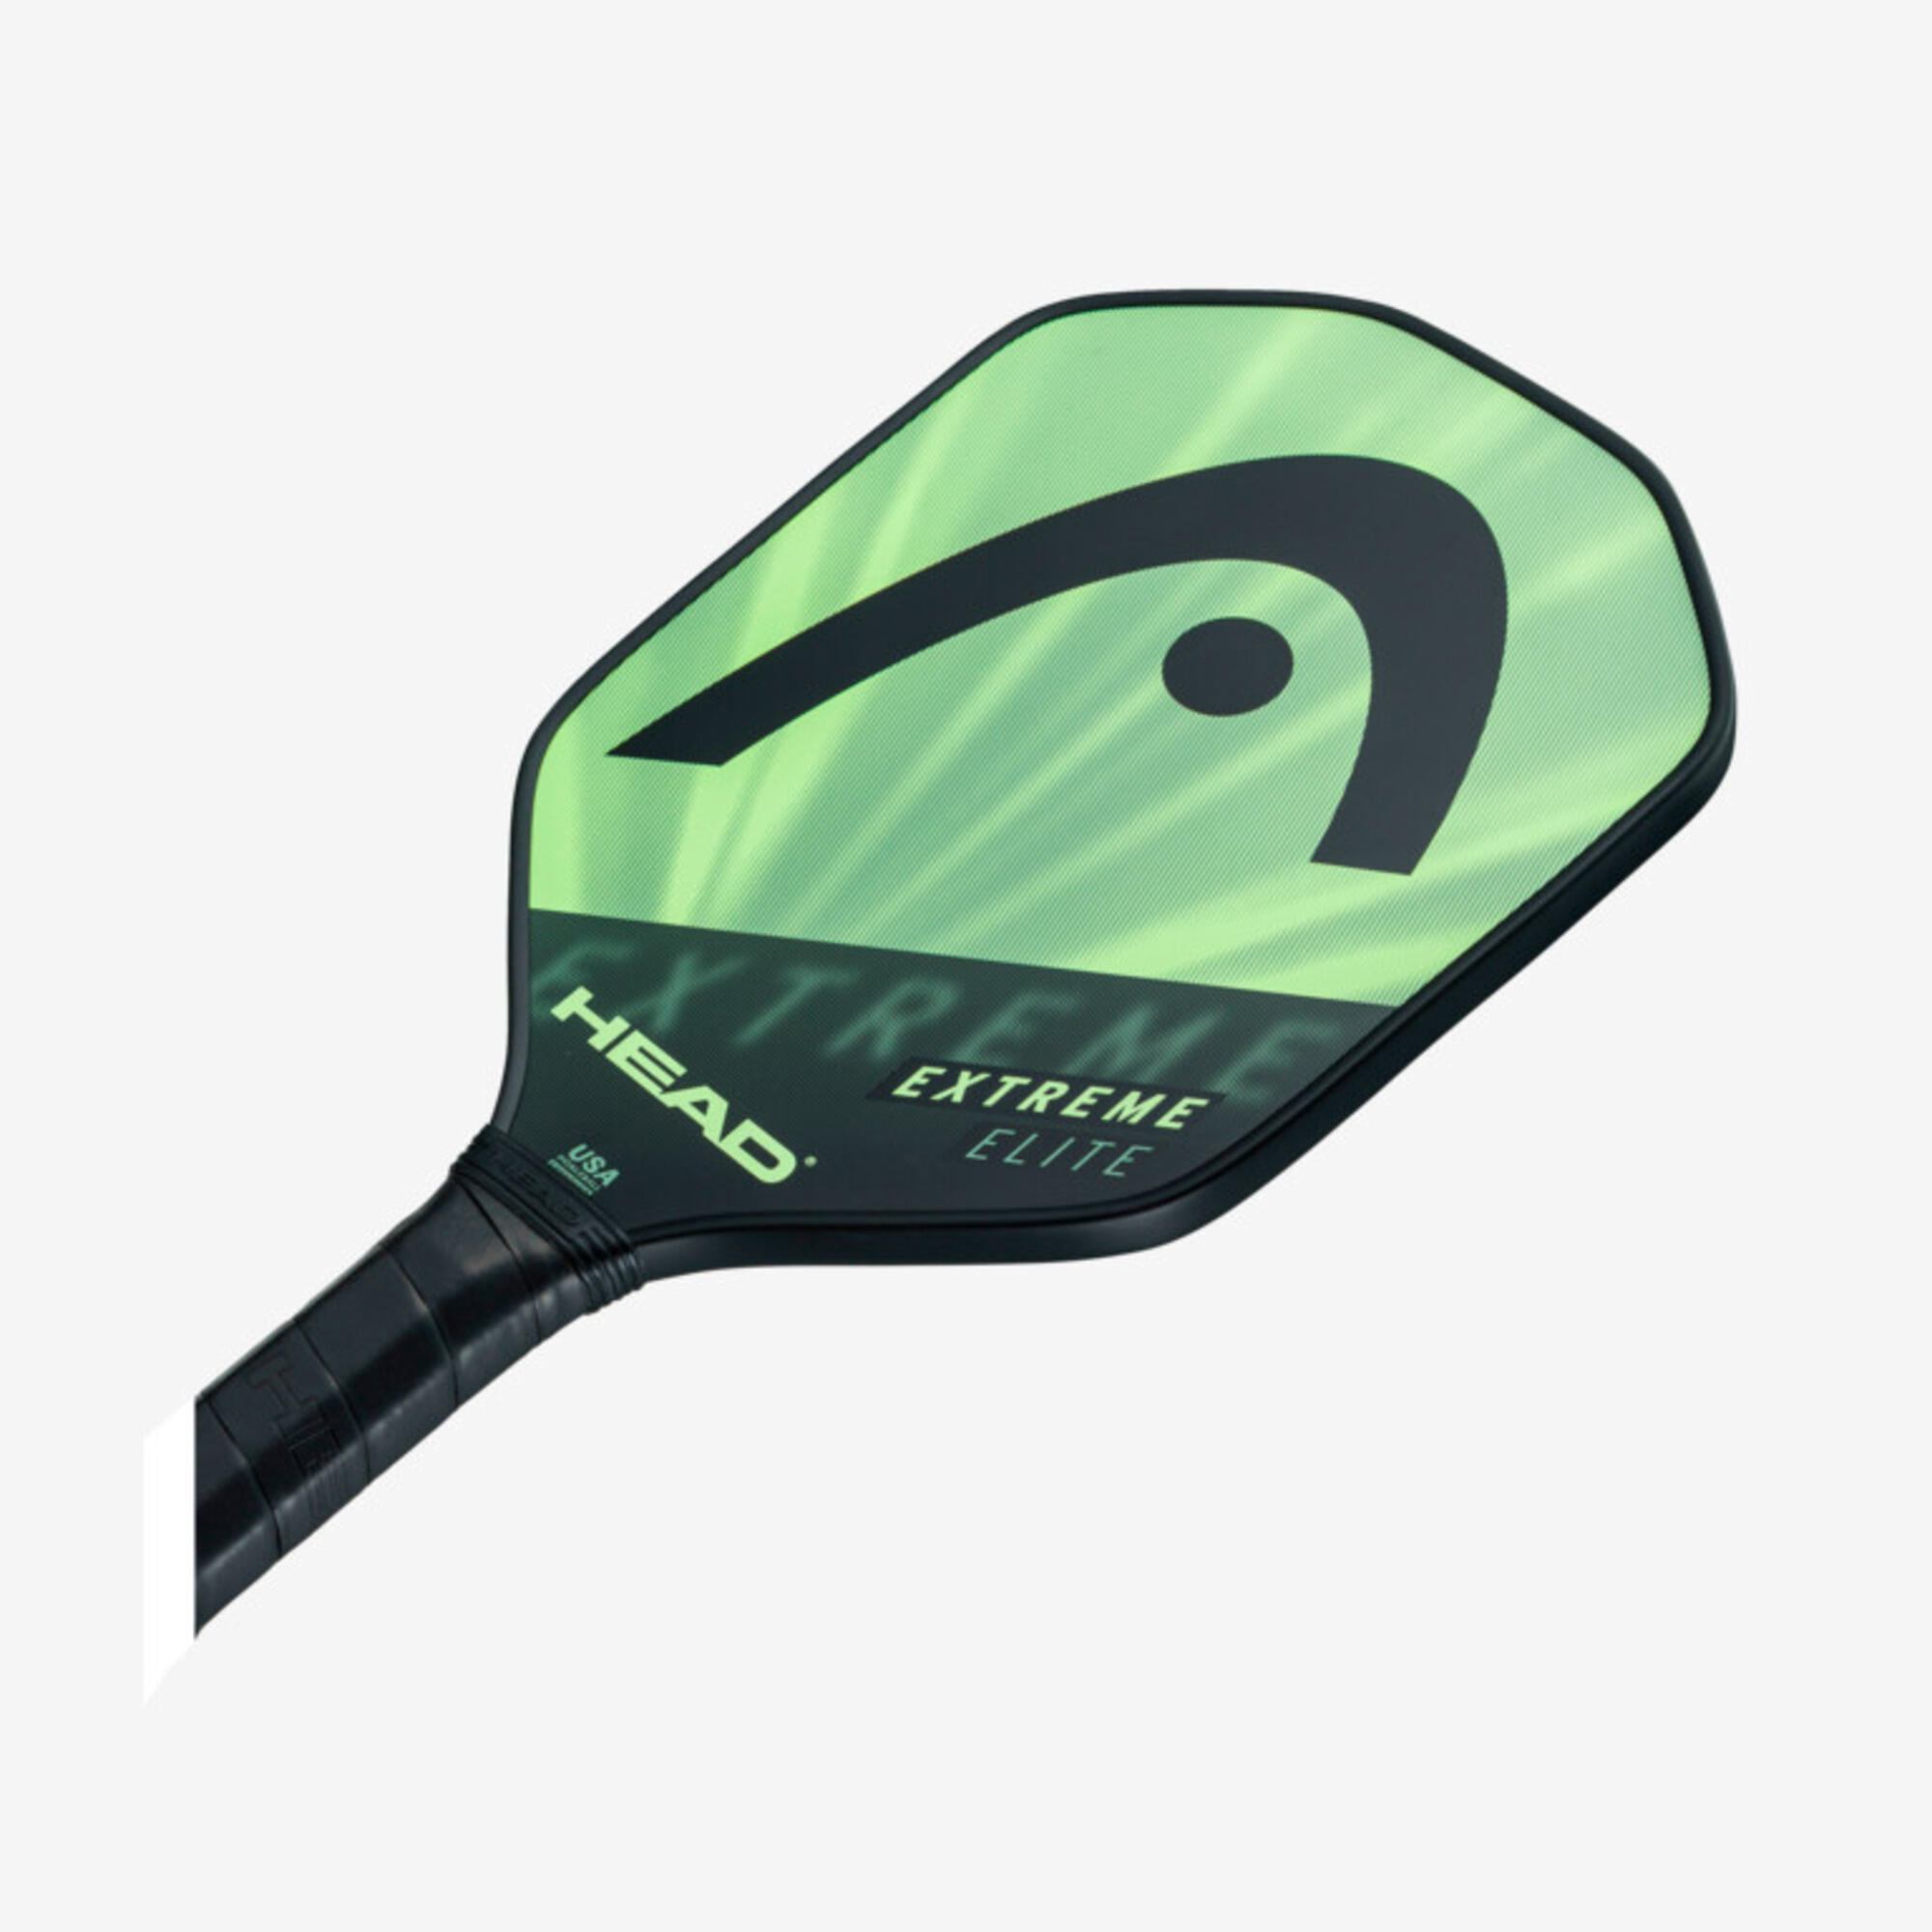 HEAD HEAD Extreme Elite pickleball racket